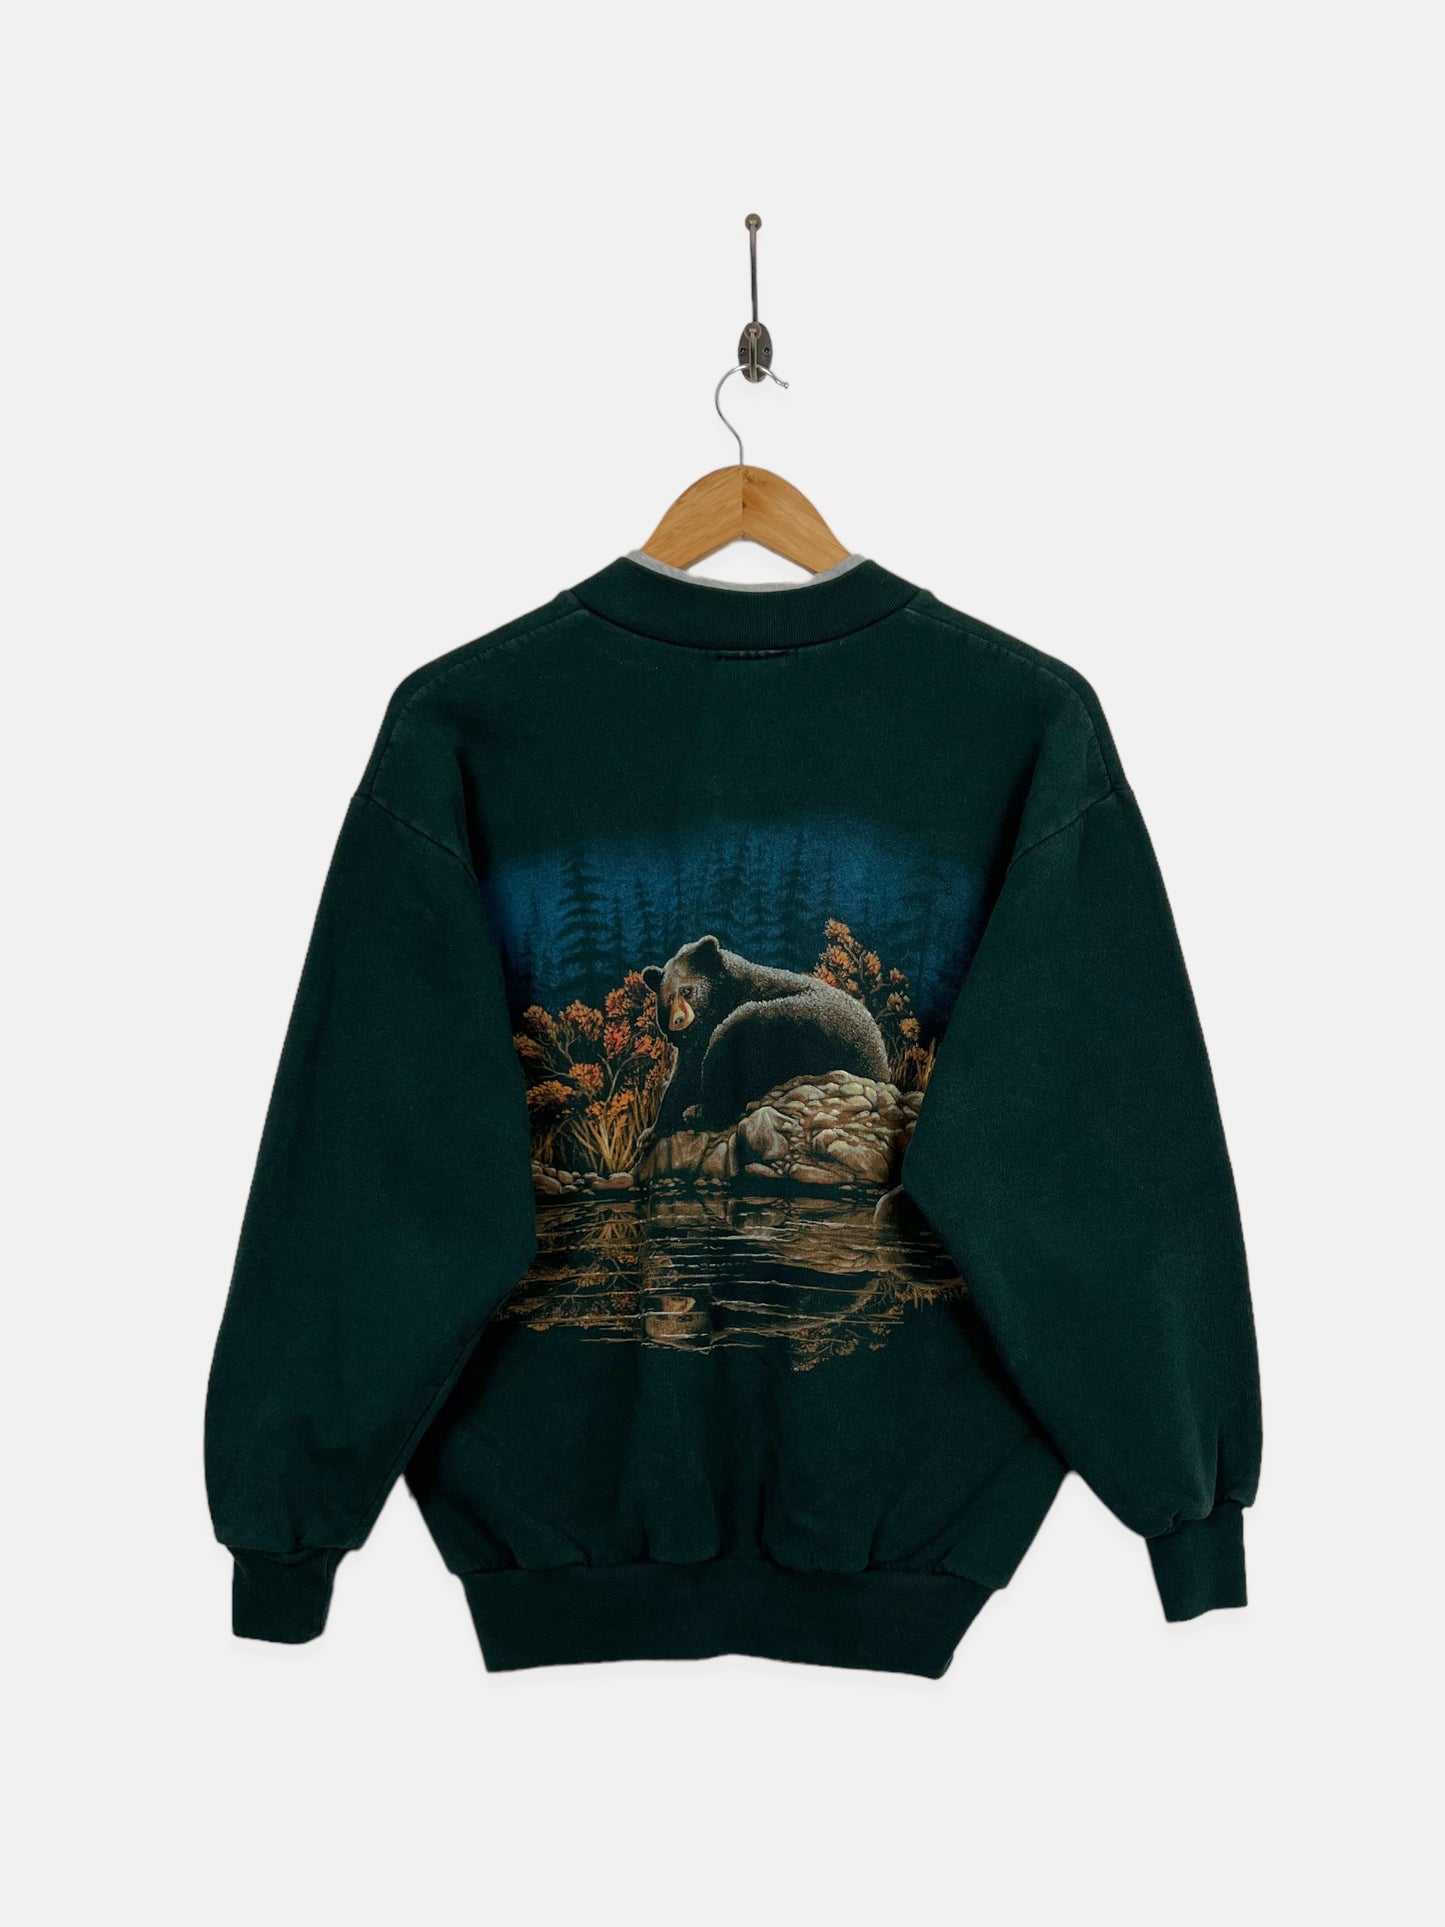 90's All Over Print USA Made Vintage Sweatshirt Size 8